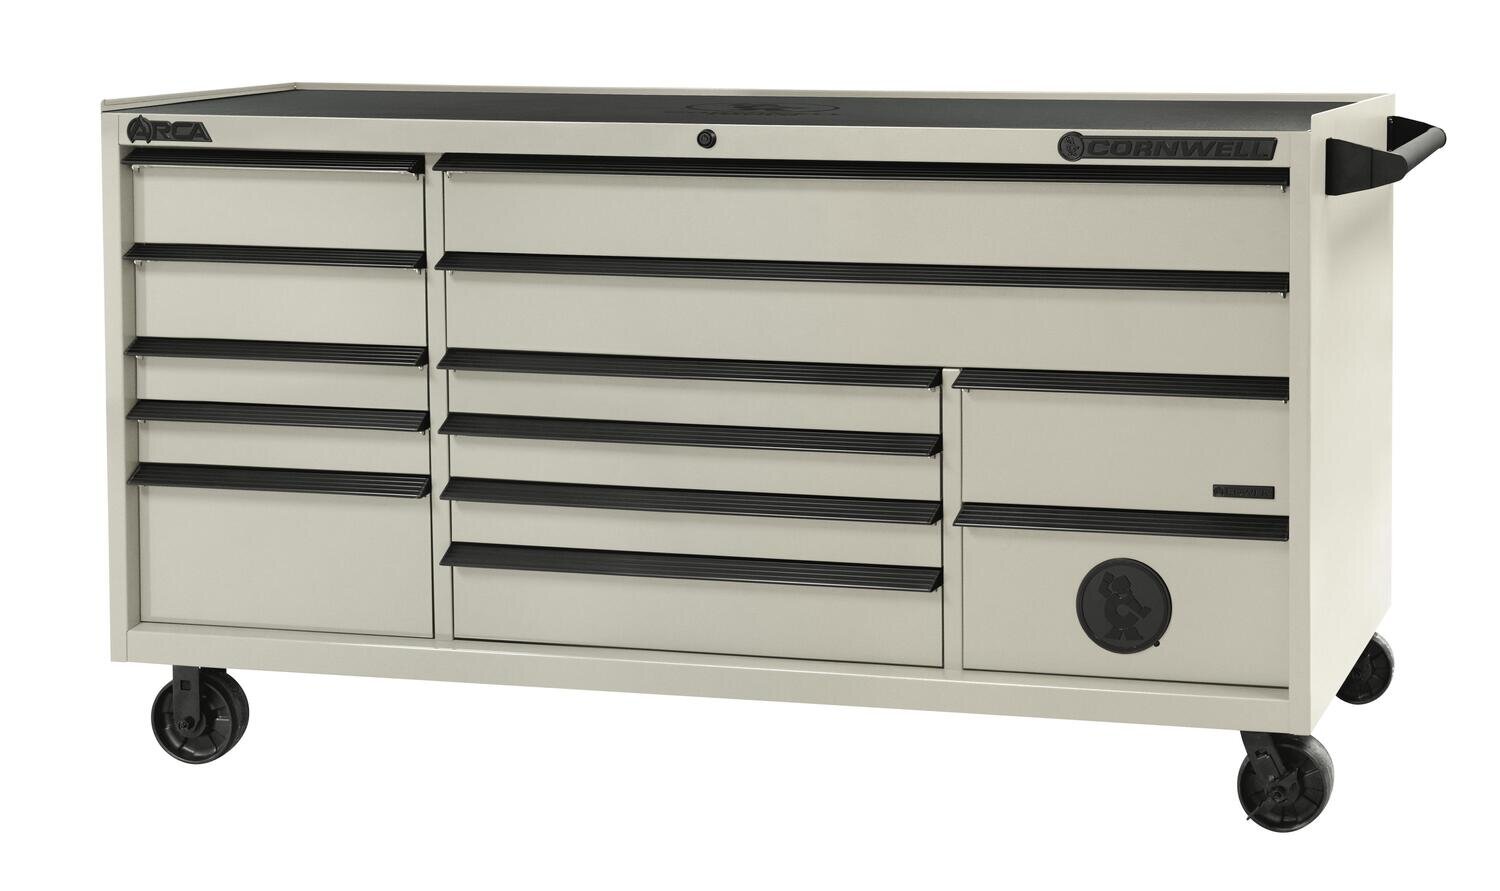 CTSASR7913KVP - ARCA™ 79” 13-Drawer Triple Bank Roller Cabinet, Vapor